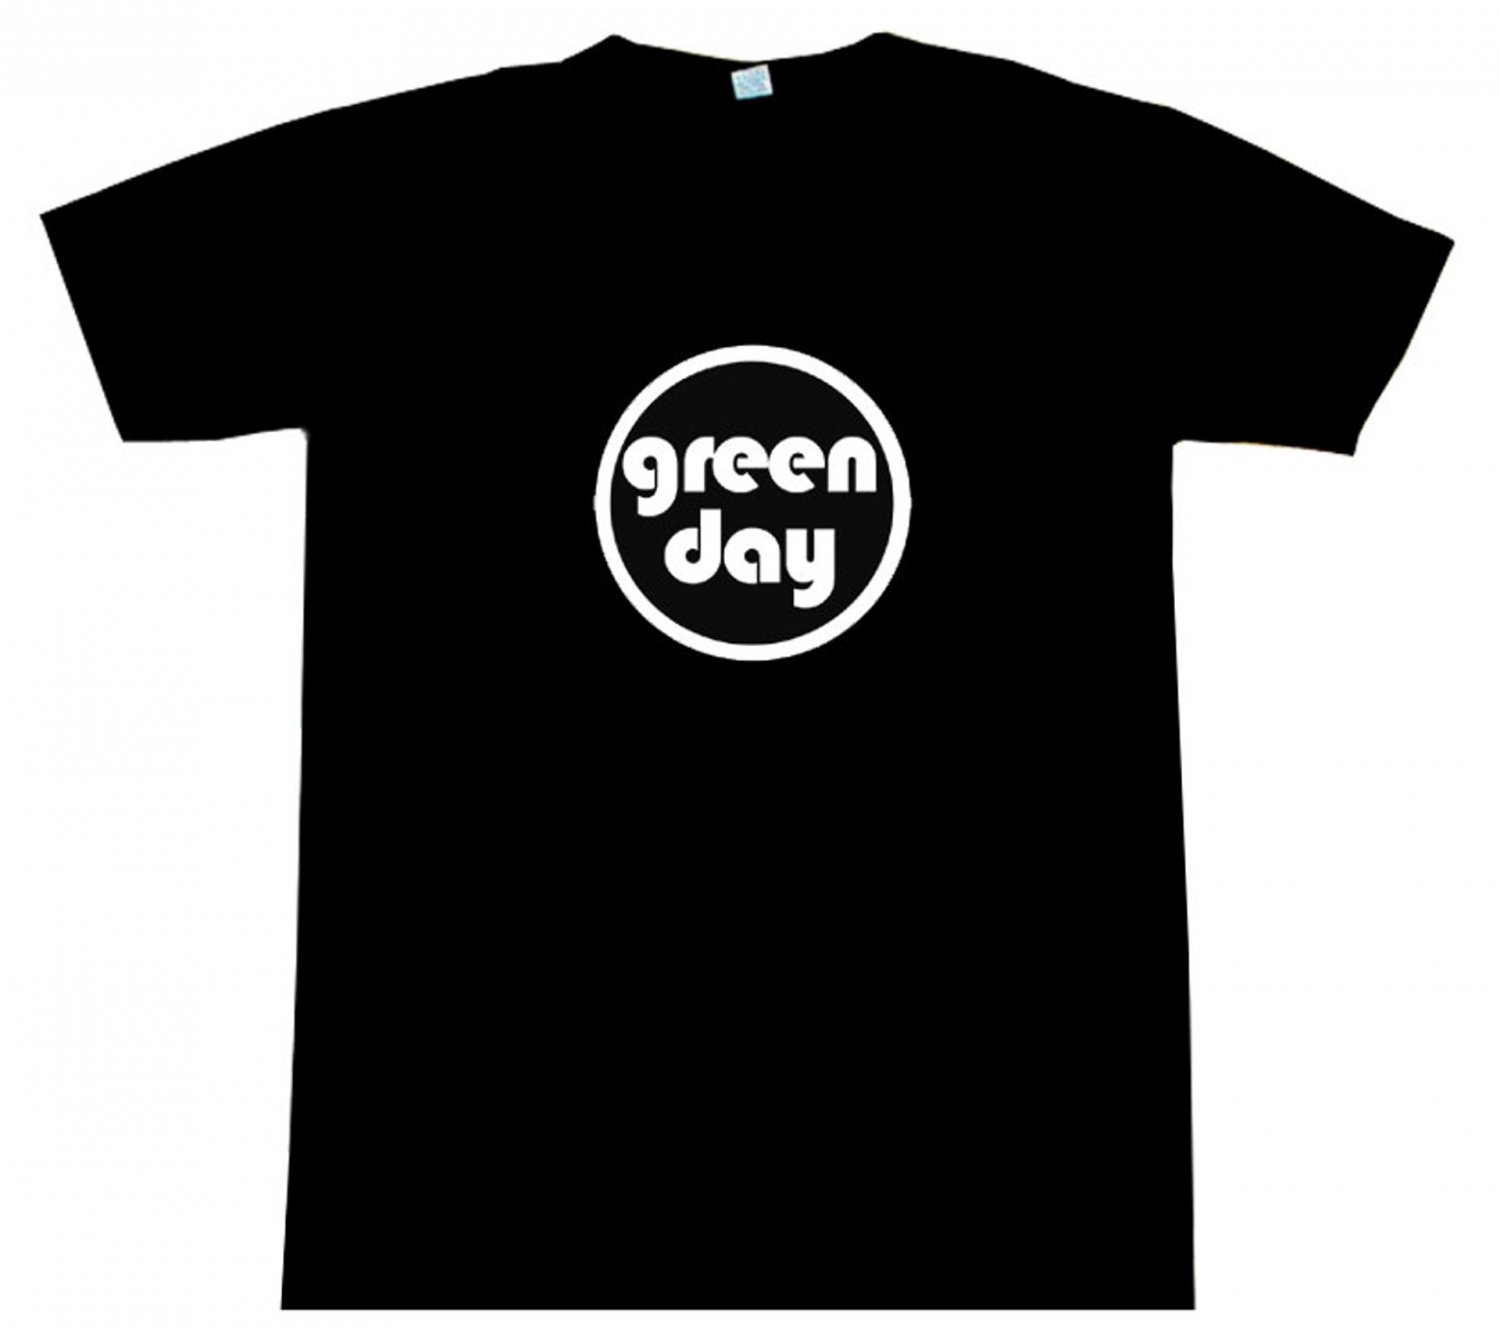 Green Day "O" Tee T-Shirt